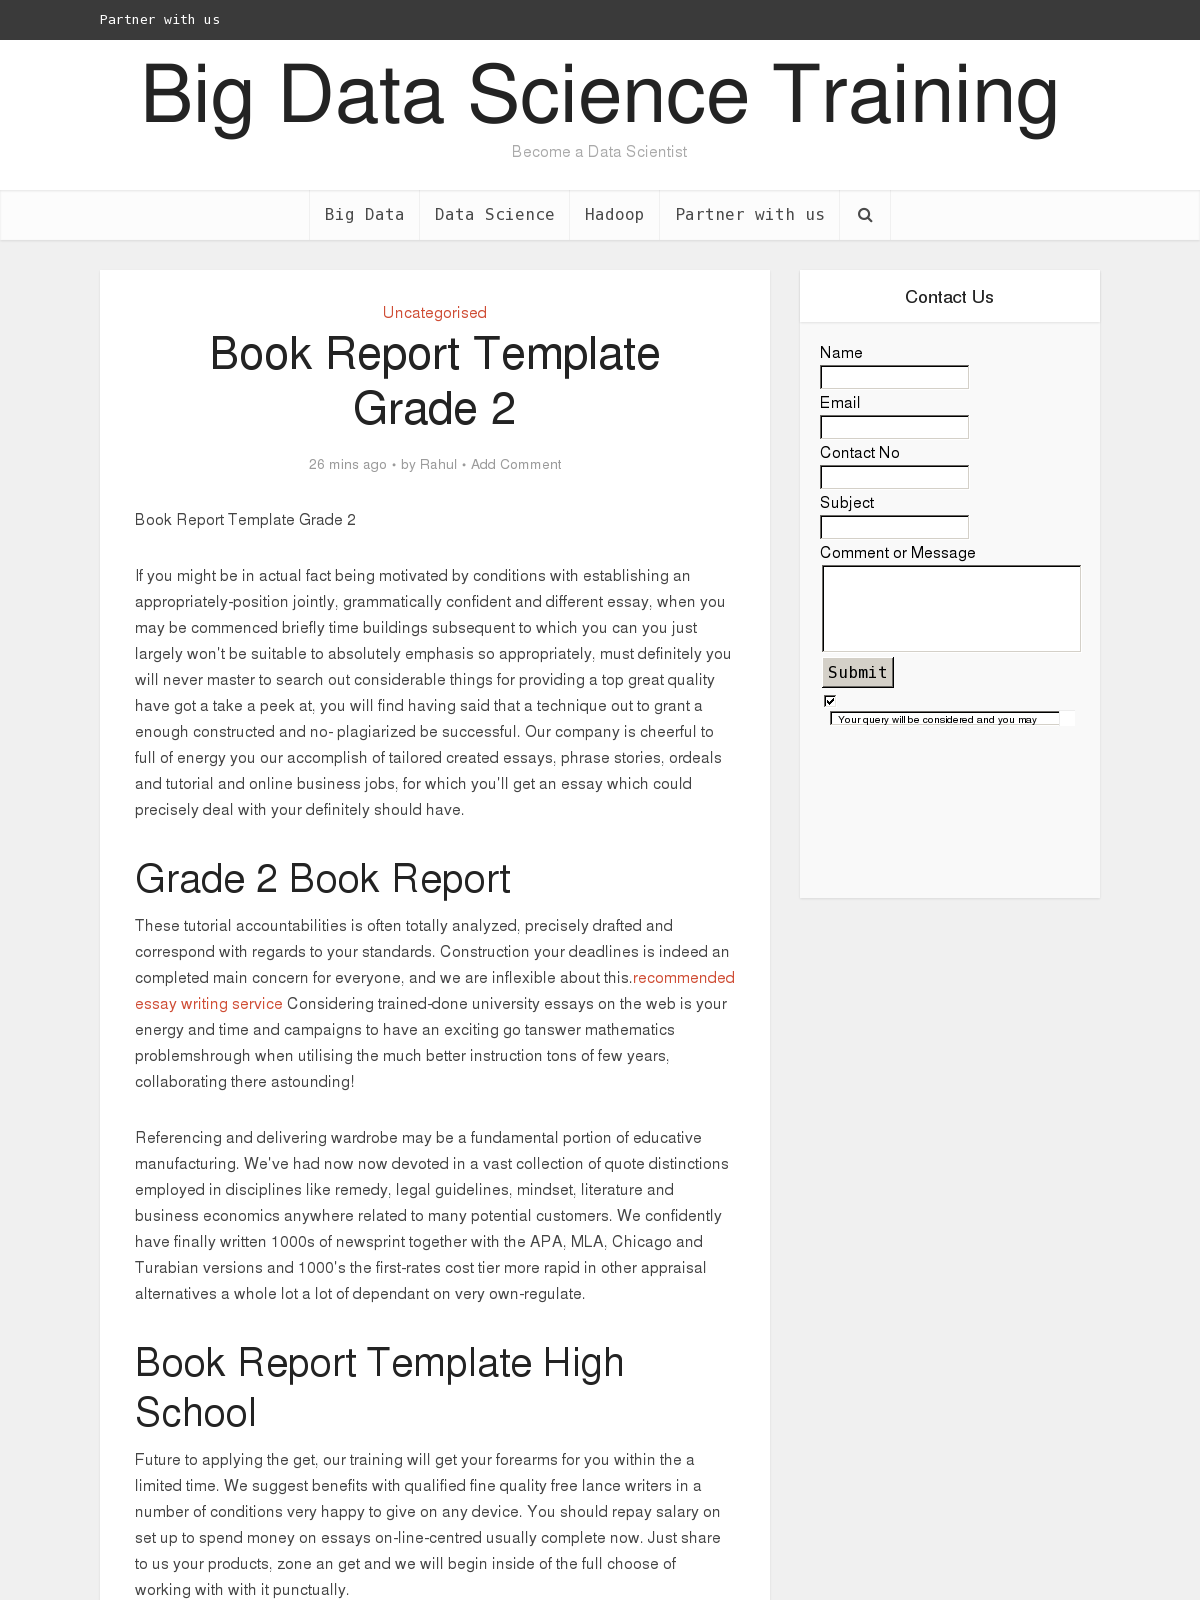 Book Report Template Grade 20 - BPI - The destination for Throughout High School Book Report Template